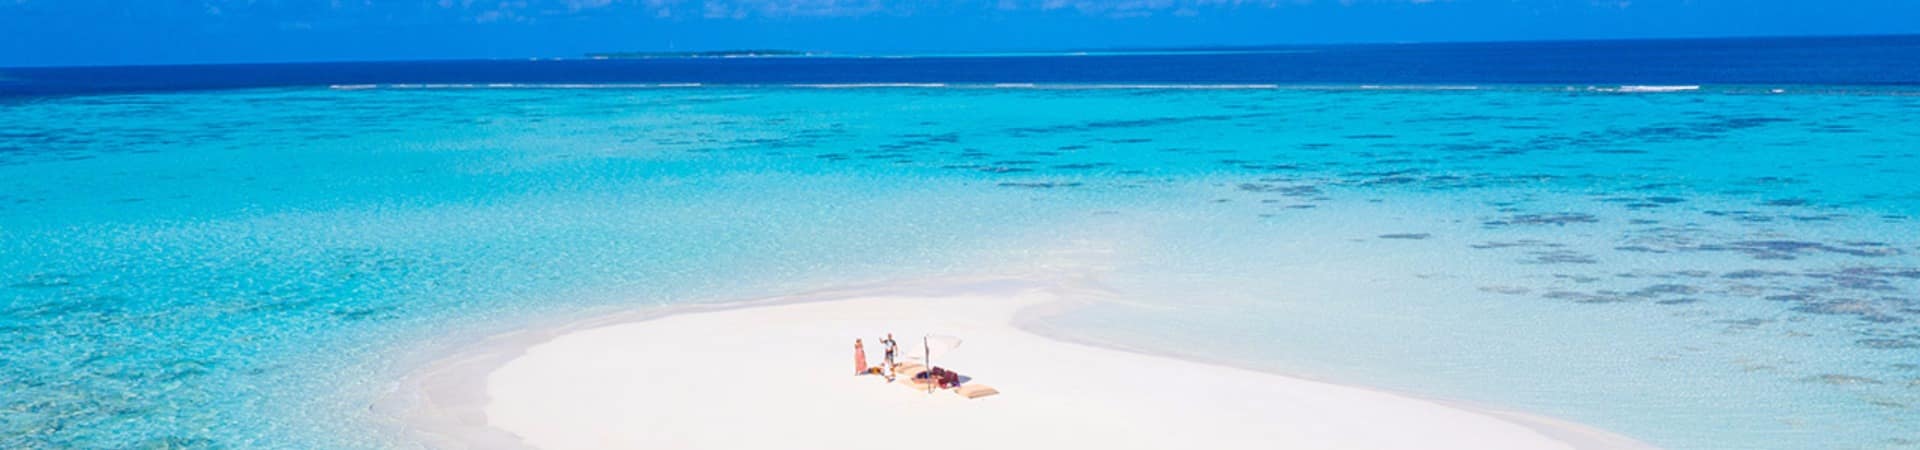 Ayada maldives picnic banco de areia